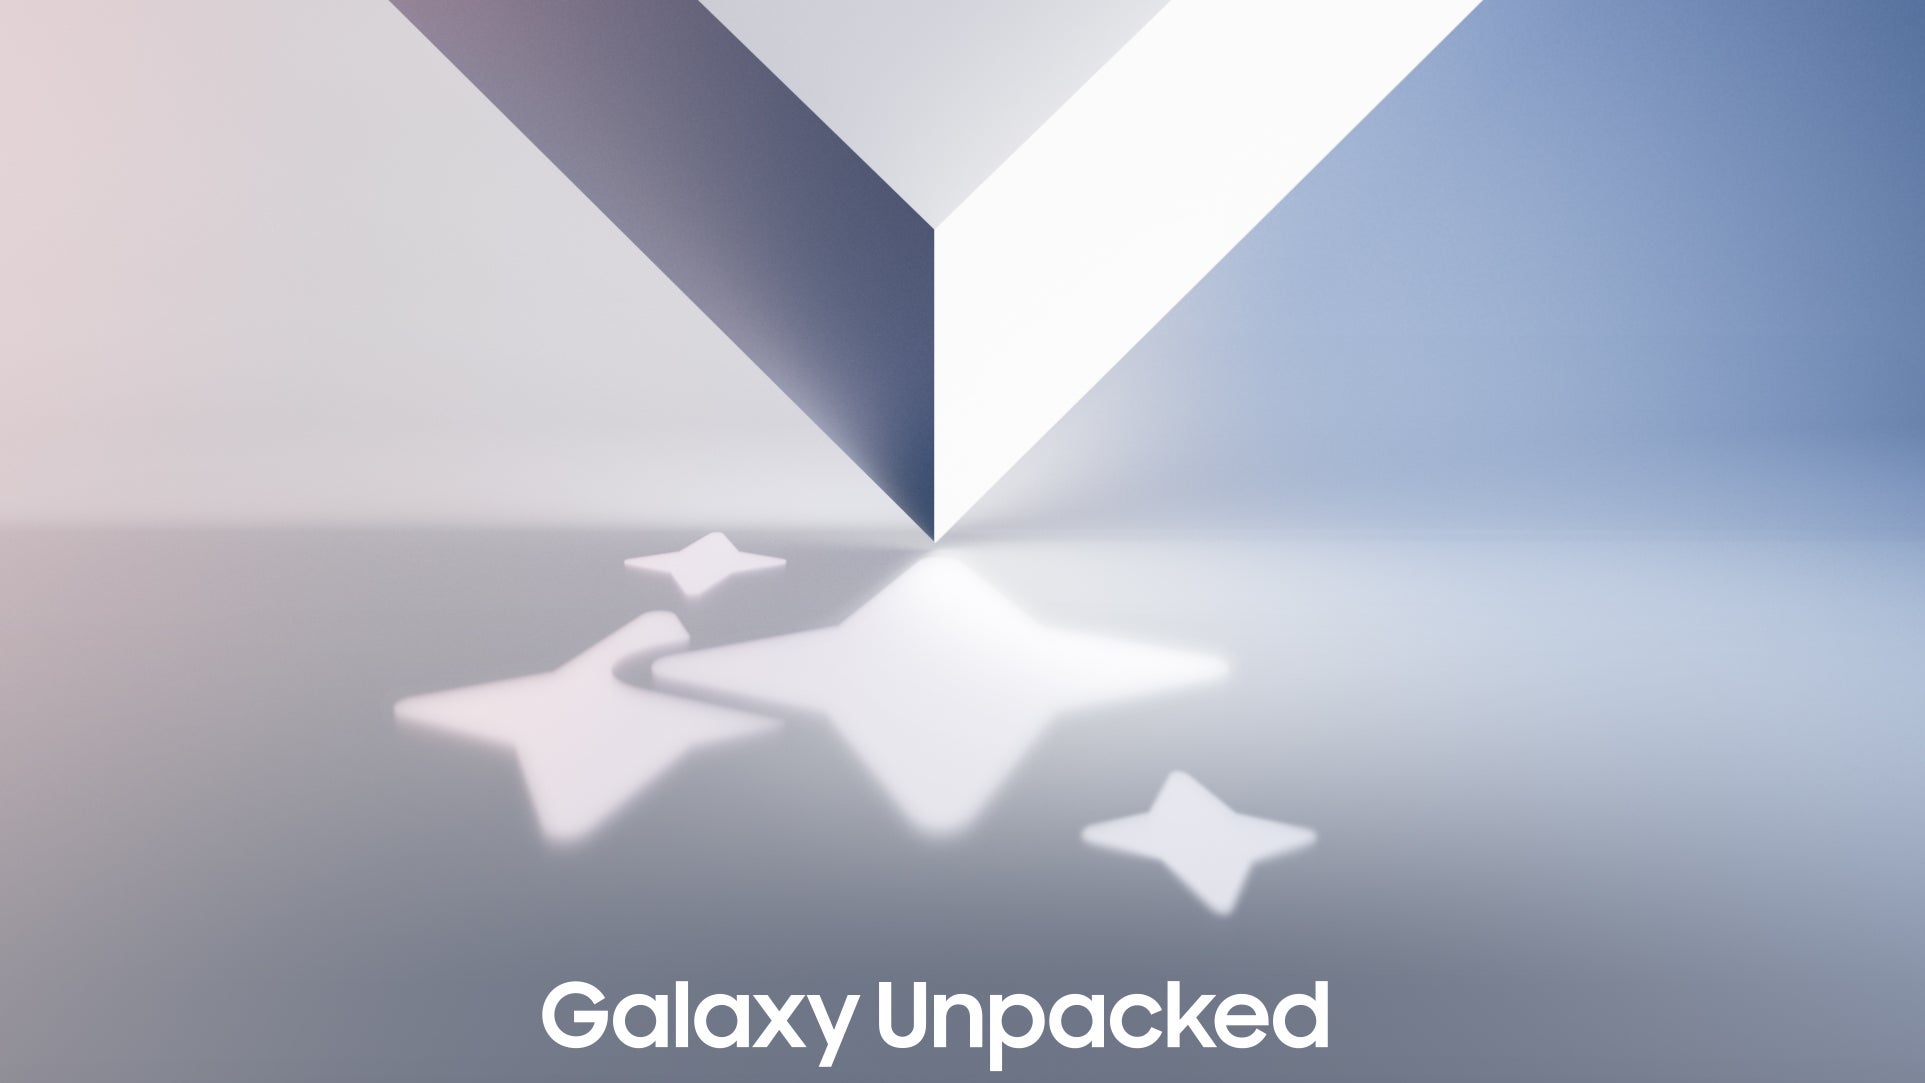 Galaxy Unpacked logo